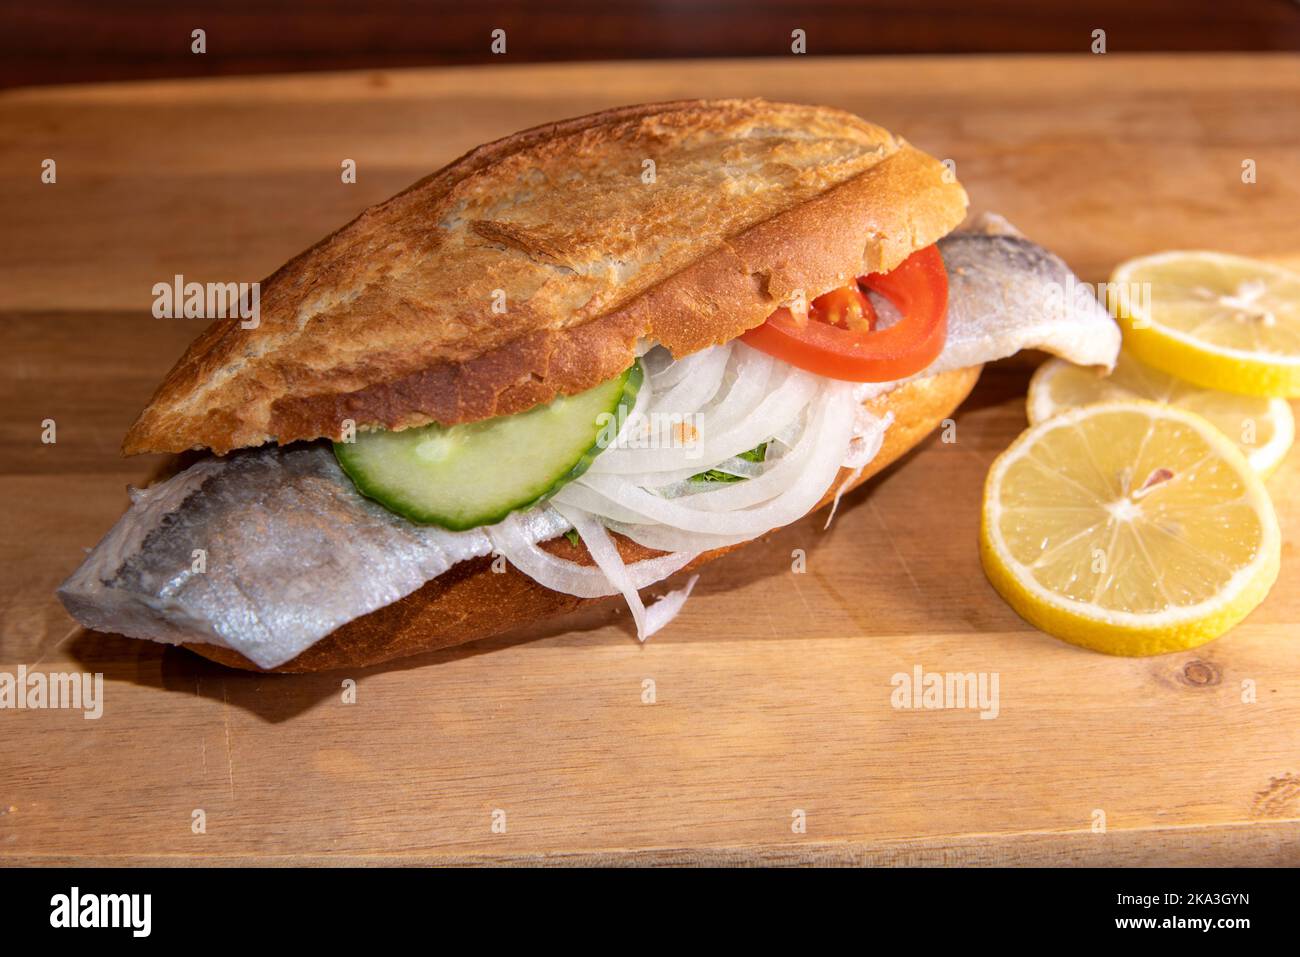 a delicious fish specialty from hamburg - fish sandwich - Hamburger Fischbrötchen - super lecker Stock Photo